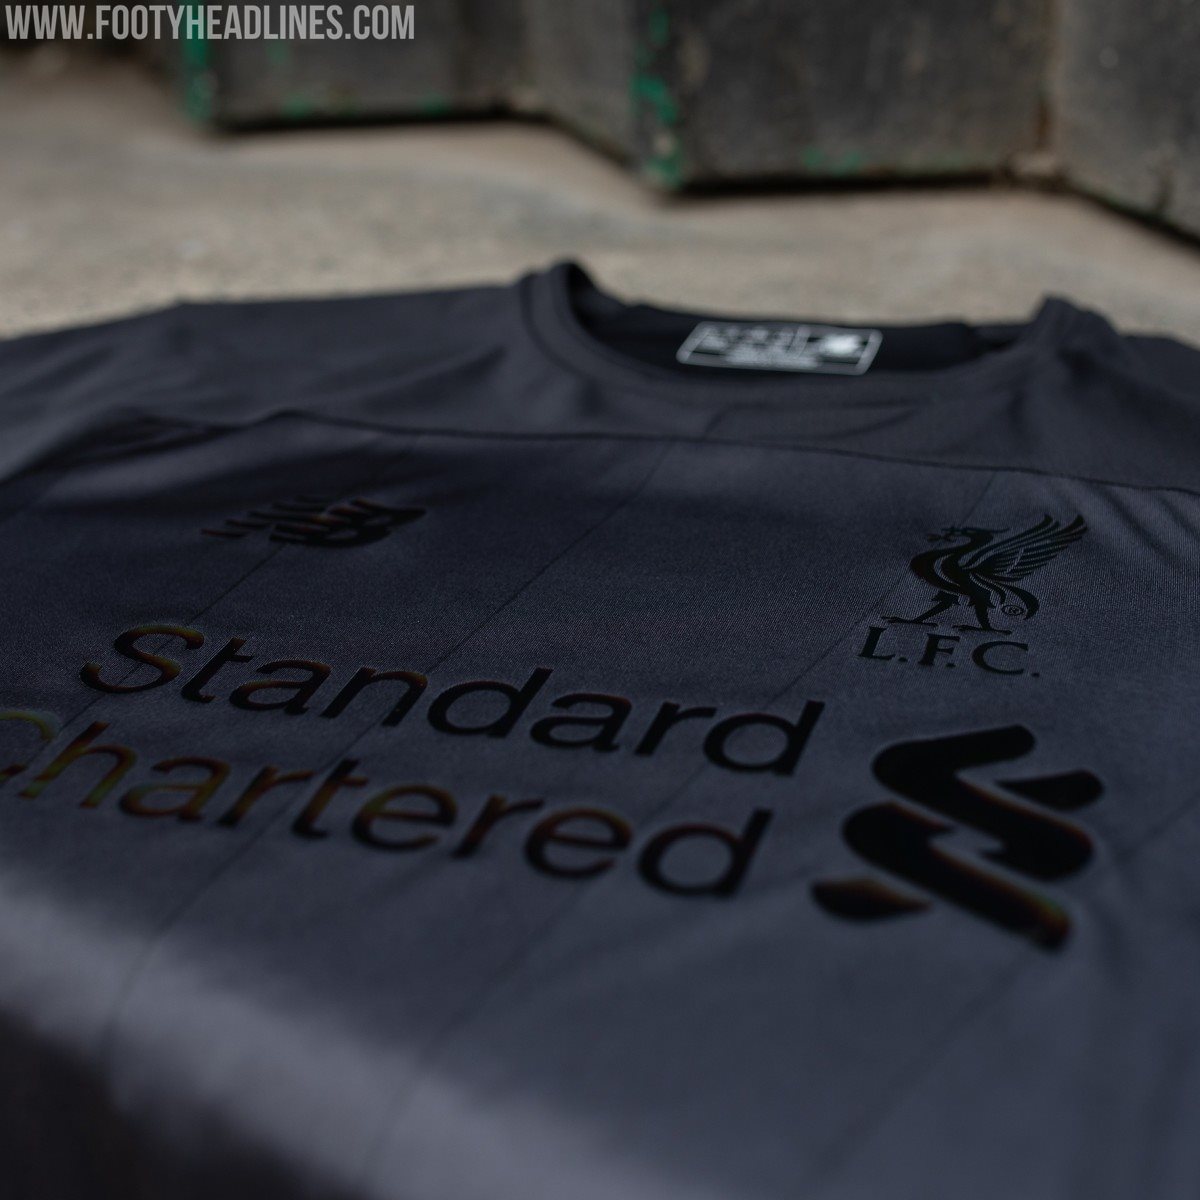 Stunning Liverpool 19-20 Blackout Kit Released - Footy Headlines